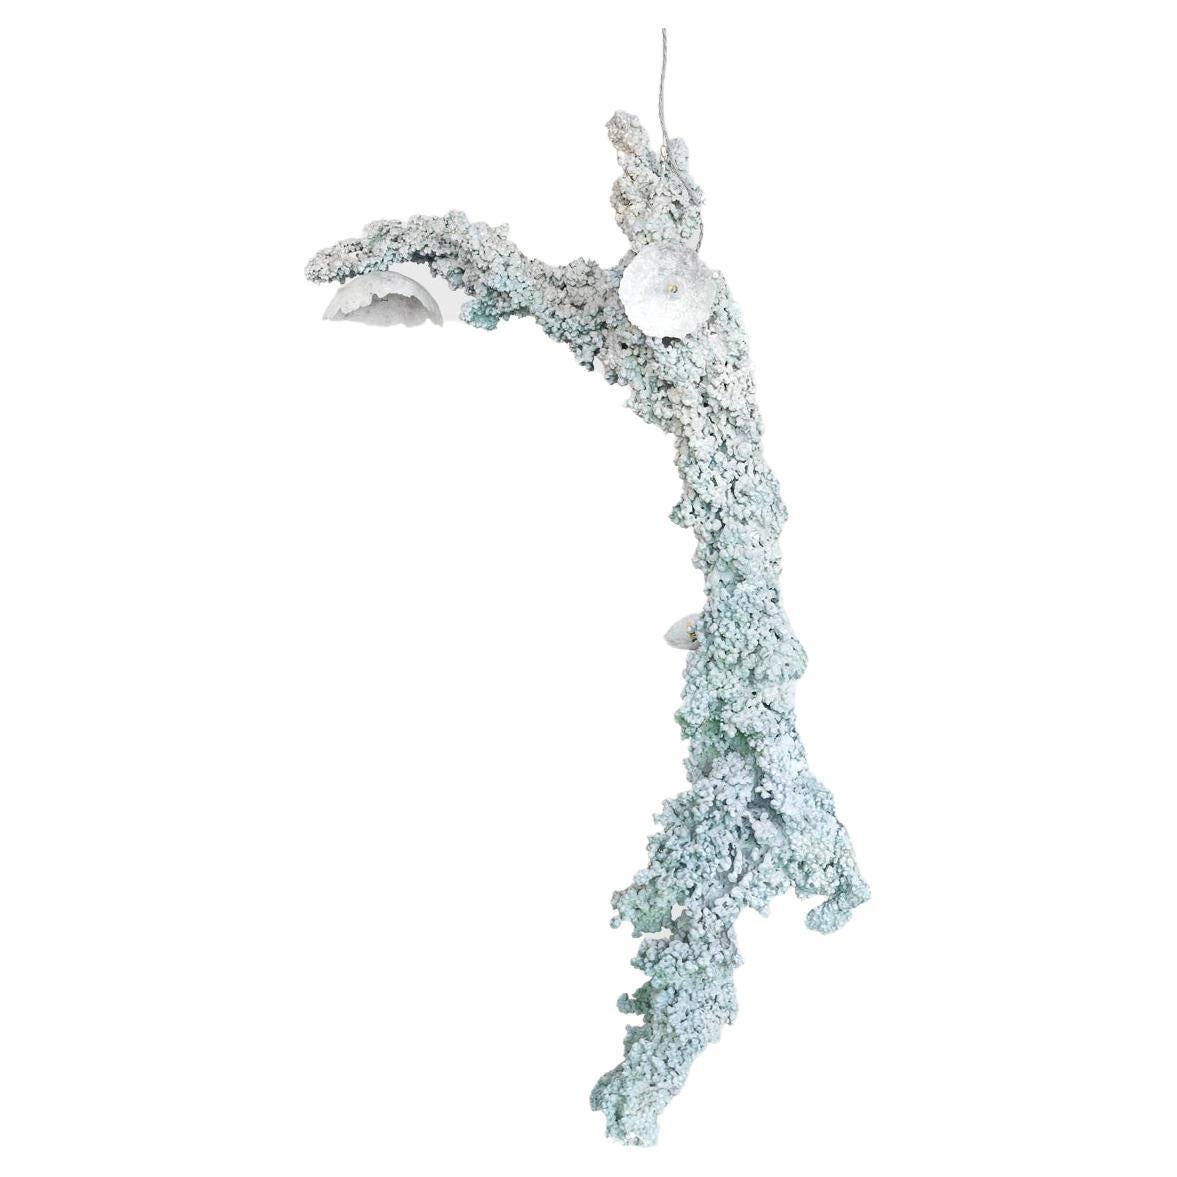 Elissa Lacoste Contemporary Hanging Chandelier model Verdigris, aluminum, resin For Sale